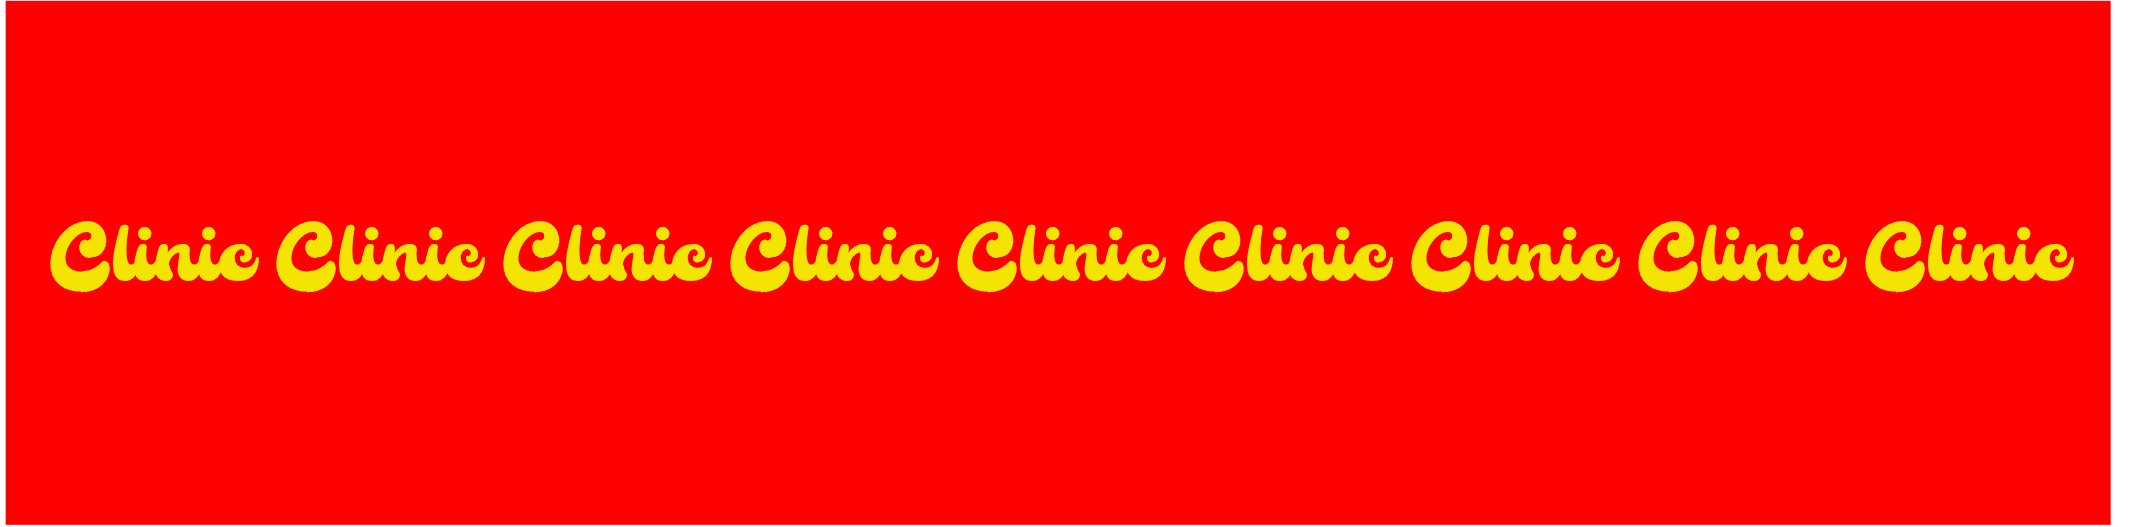 ClinicNFT banner